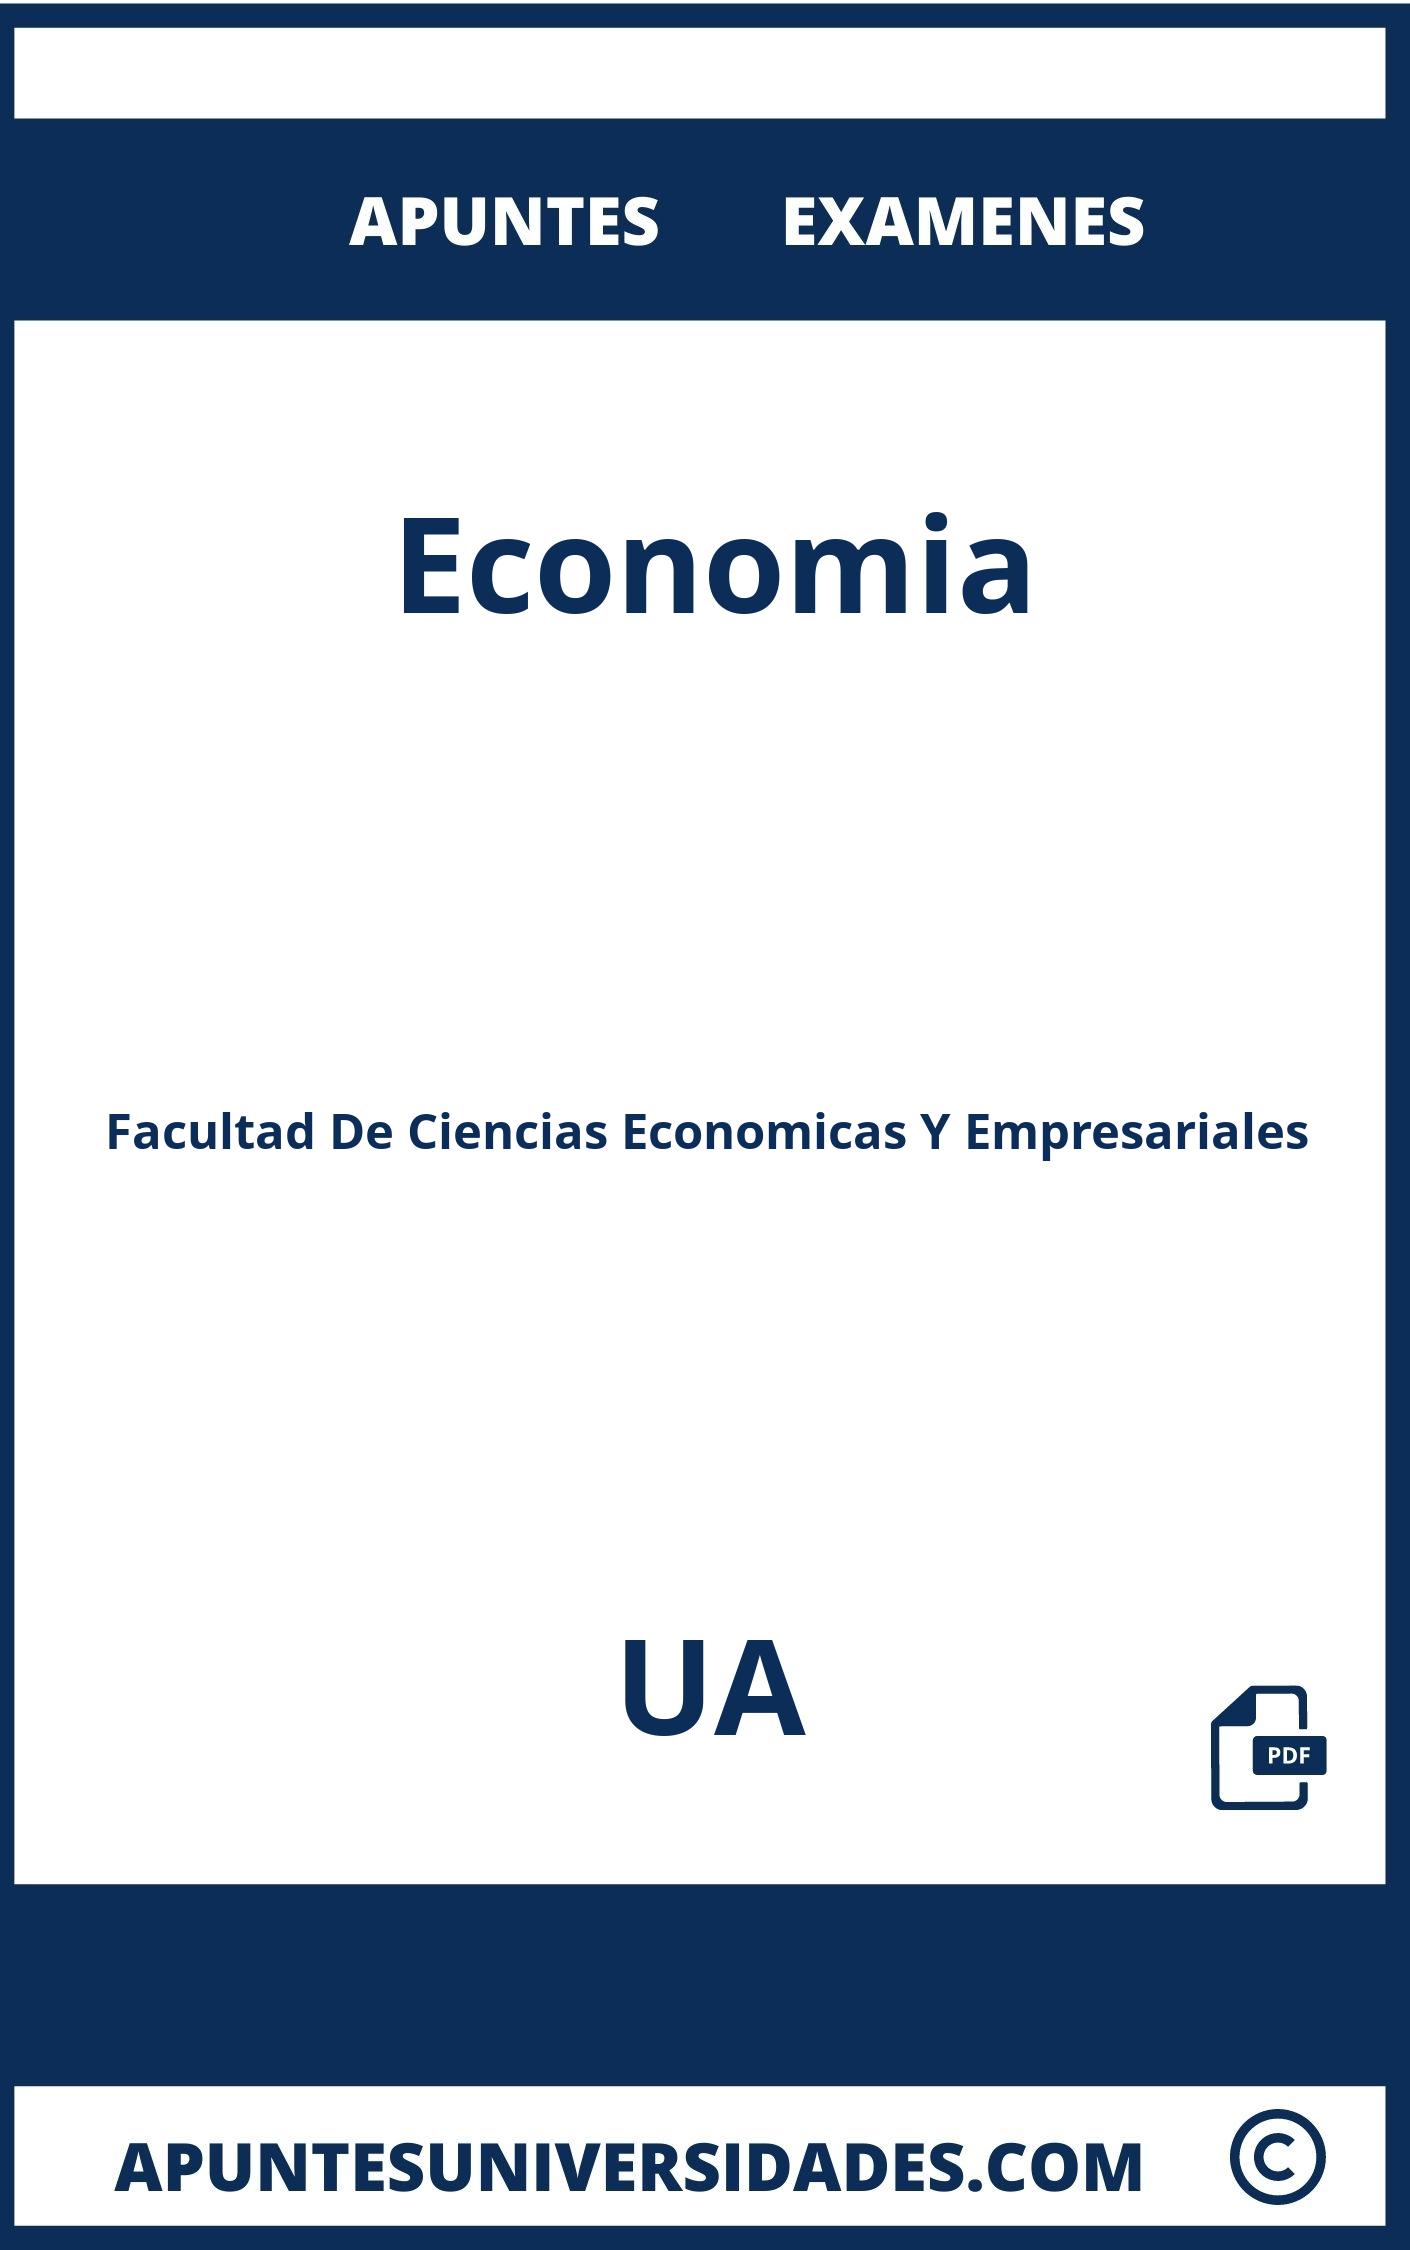 Apuntes Examenes Economia UA